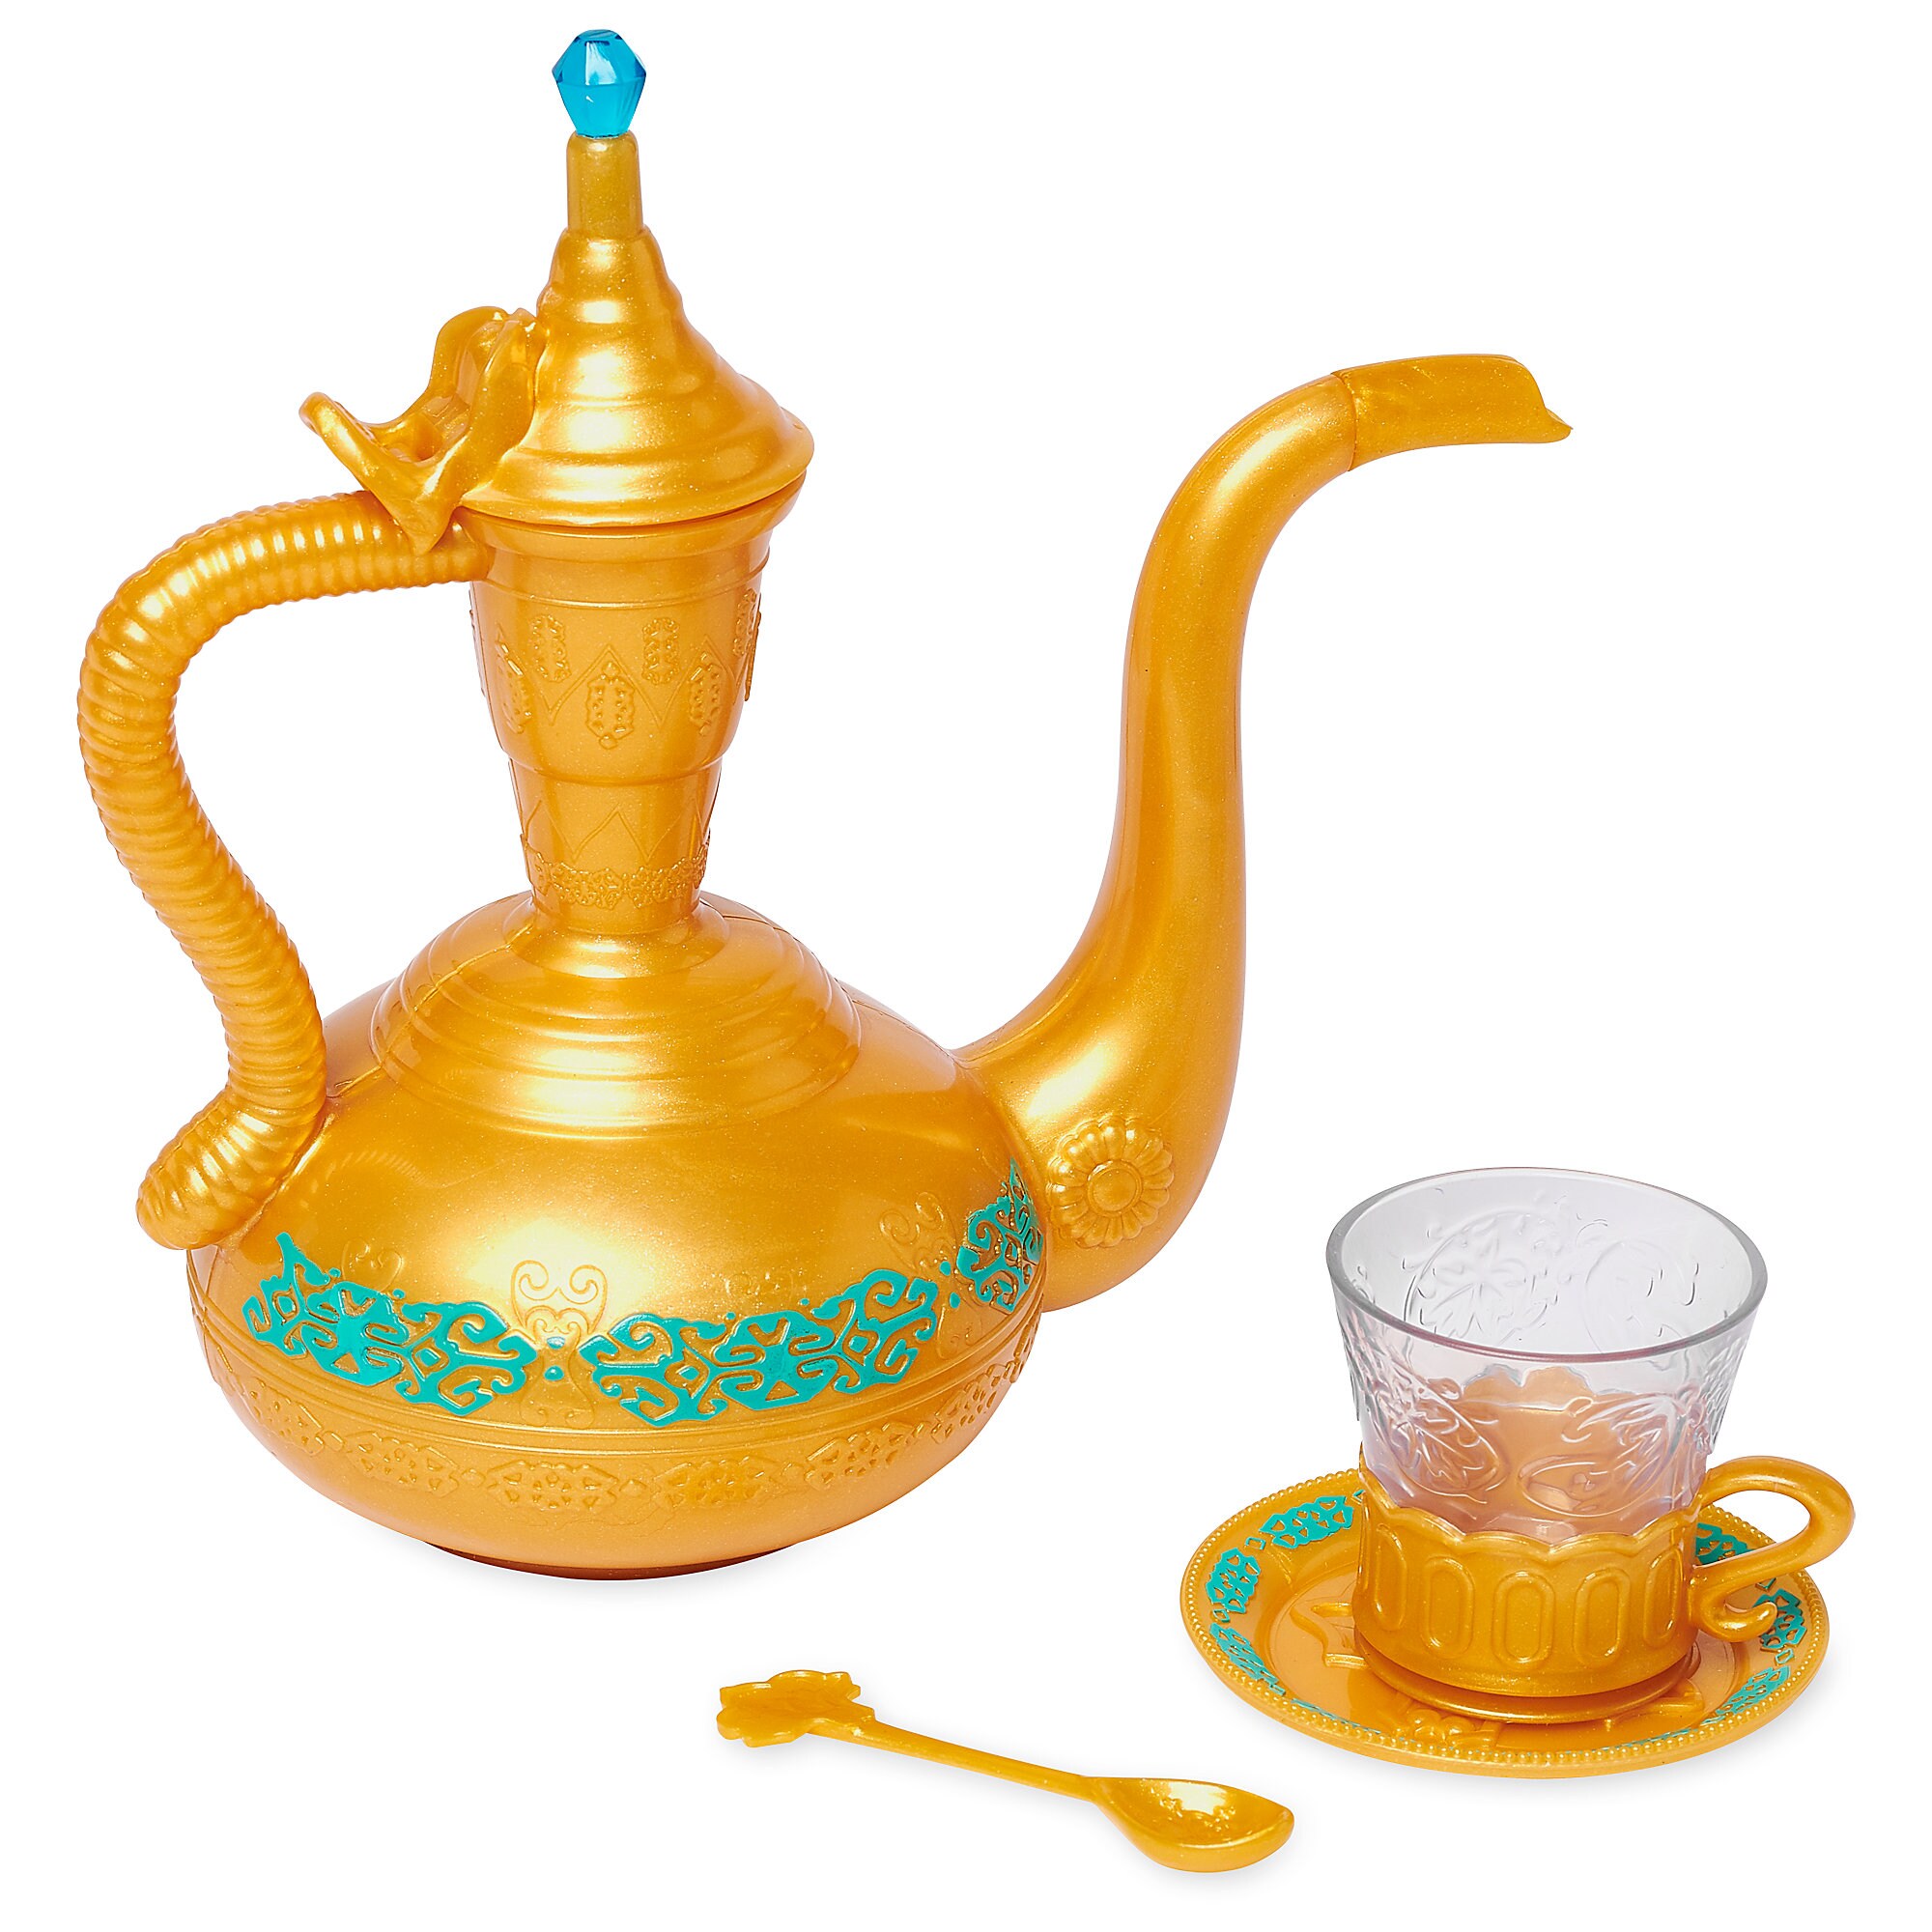 Aladdin Tea Play Set - Live Action Film